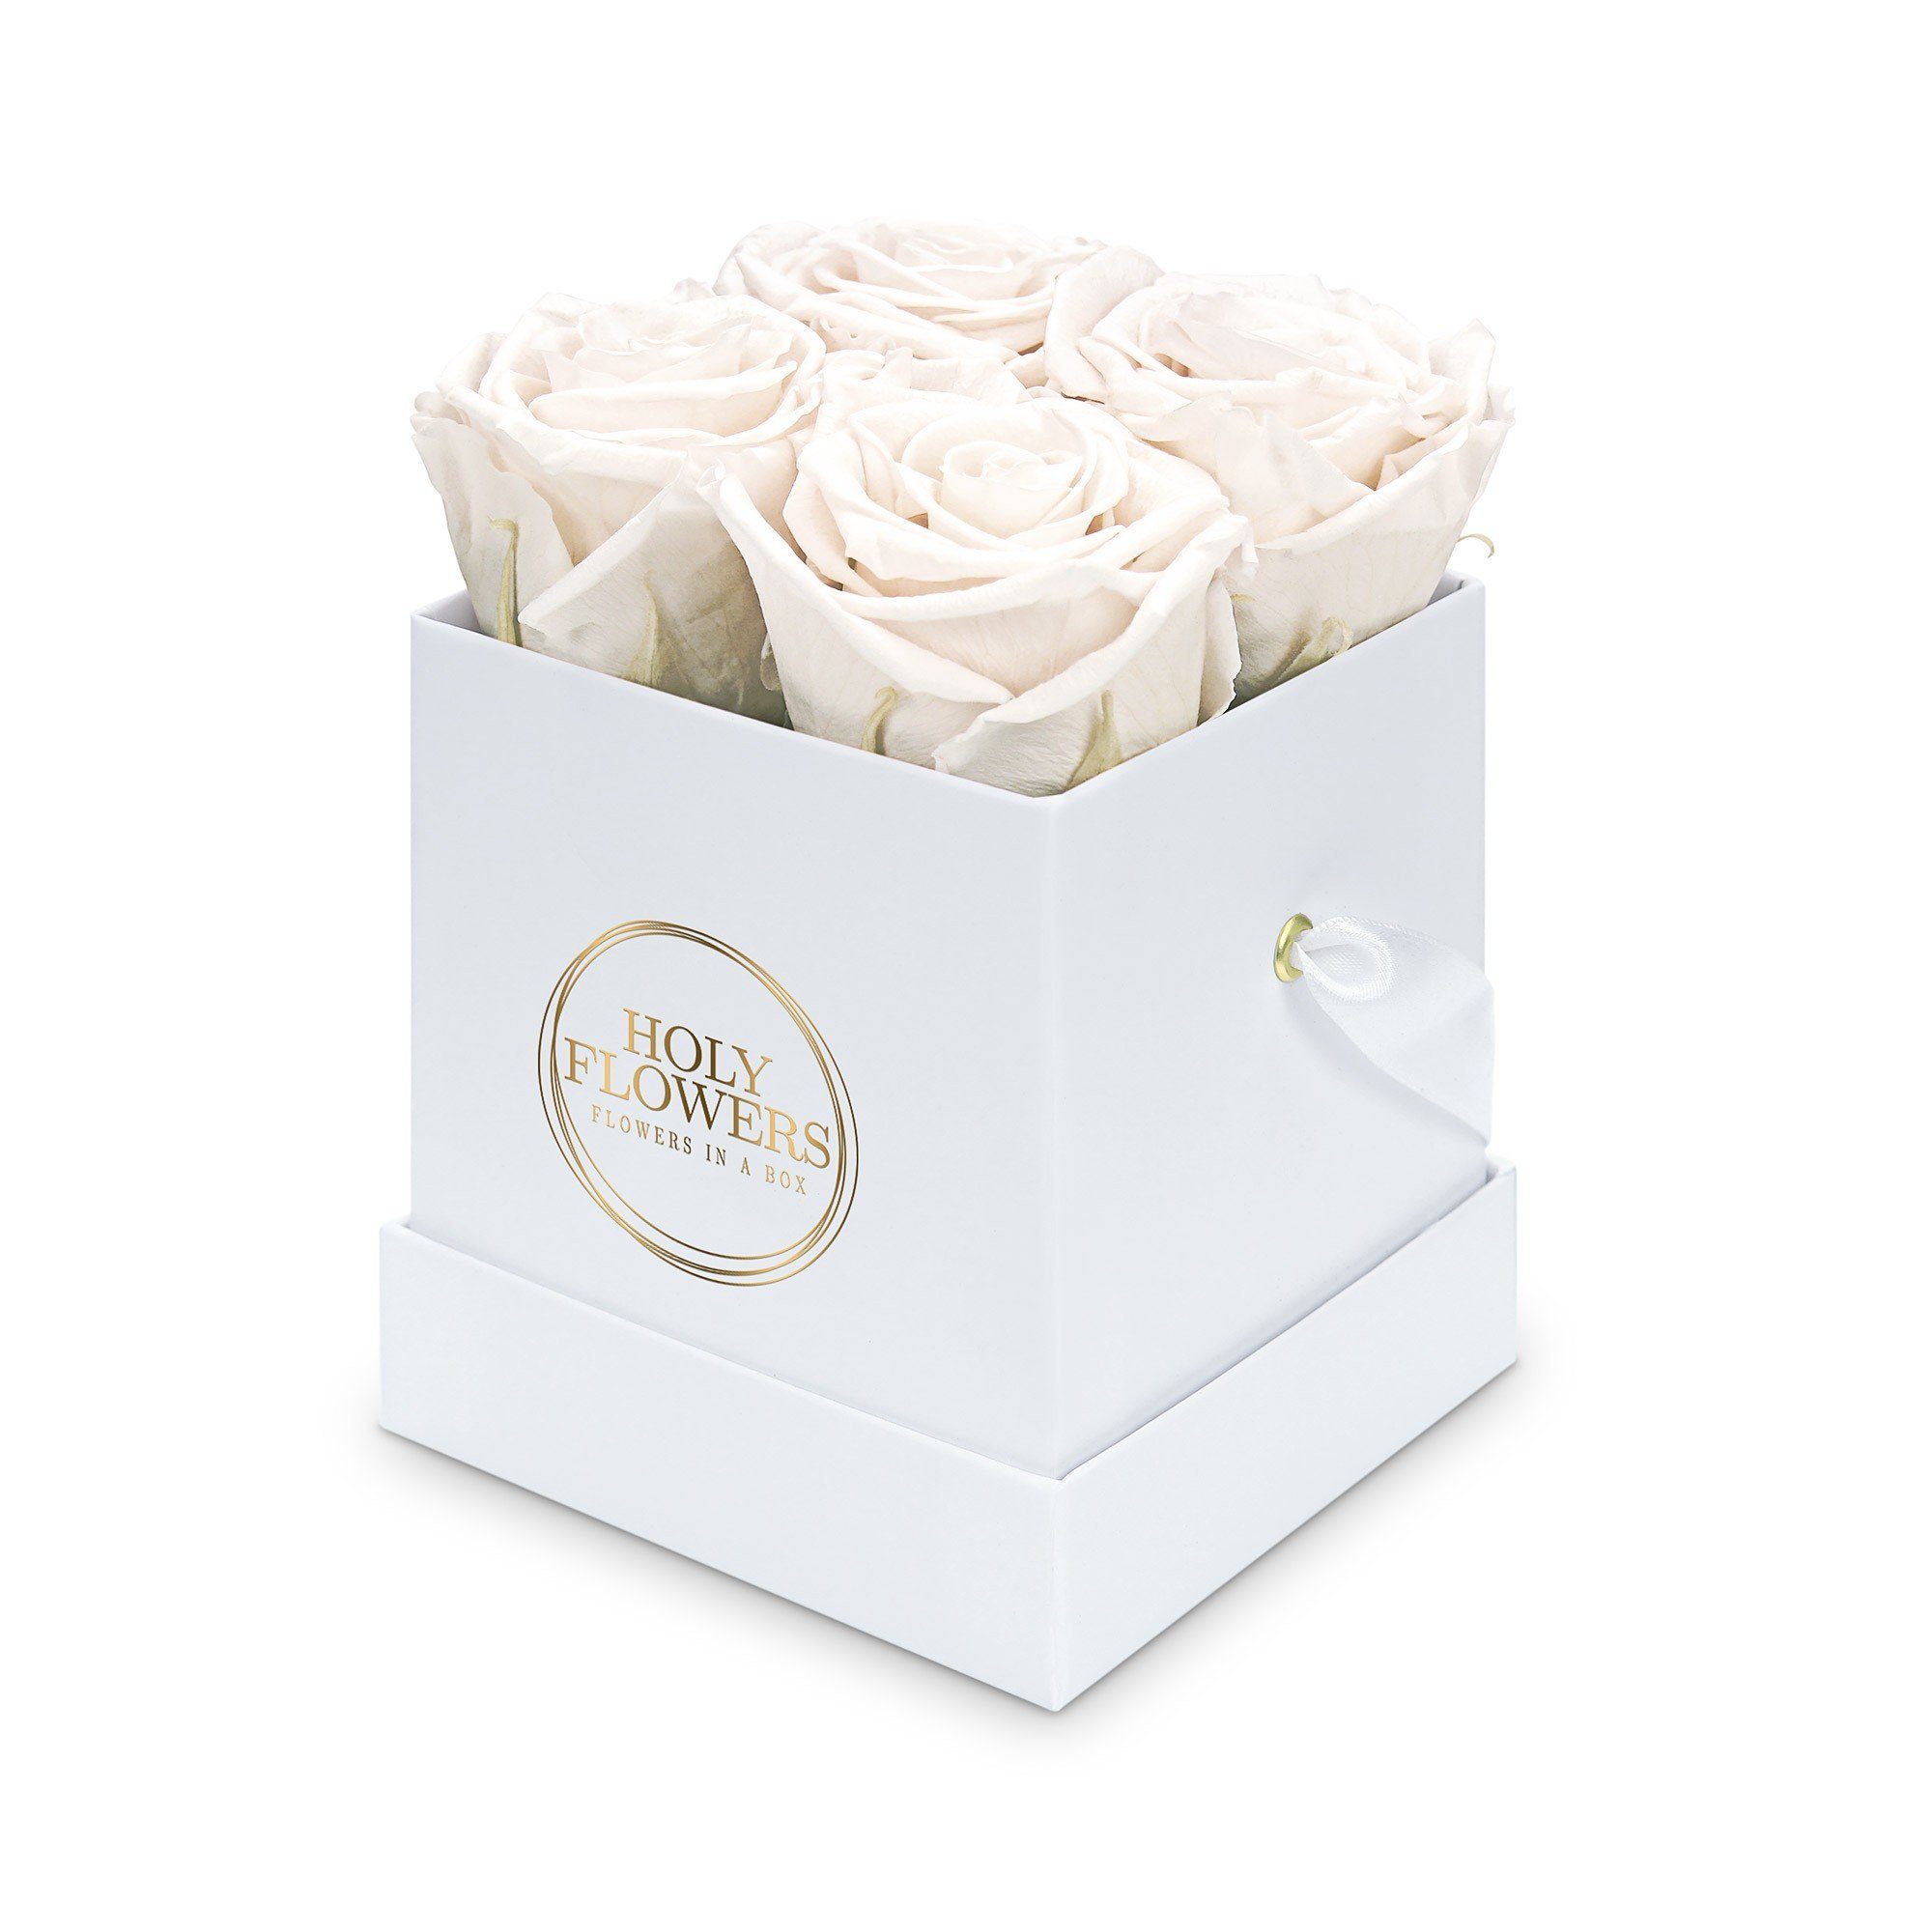 Kunstblume Eckige Rosenbox in weiß mit 4 Infinity Rosen I 3 Jahre haltbar I Echte, duftende konservierte Blumen I by Raul Richter Infinity Rose, Holy Flowers, Höhe 11 cm Holy White